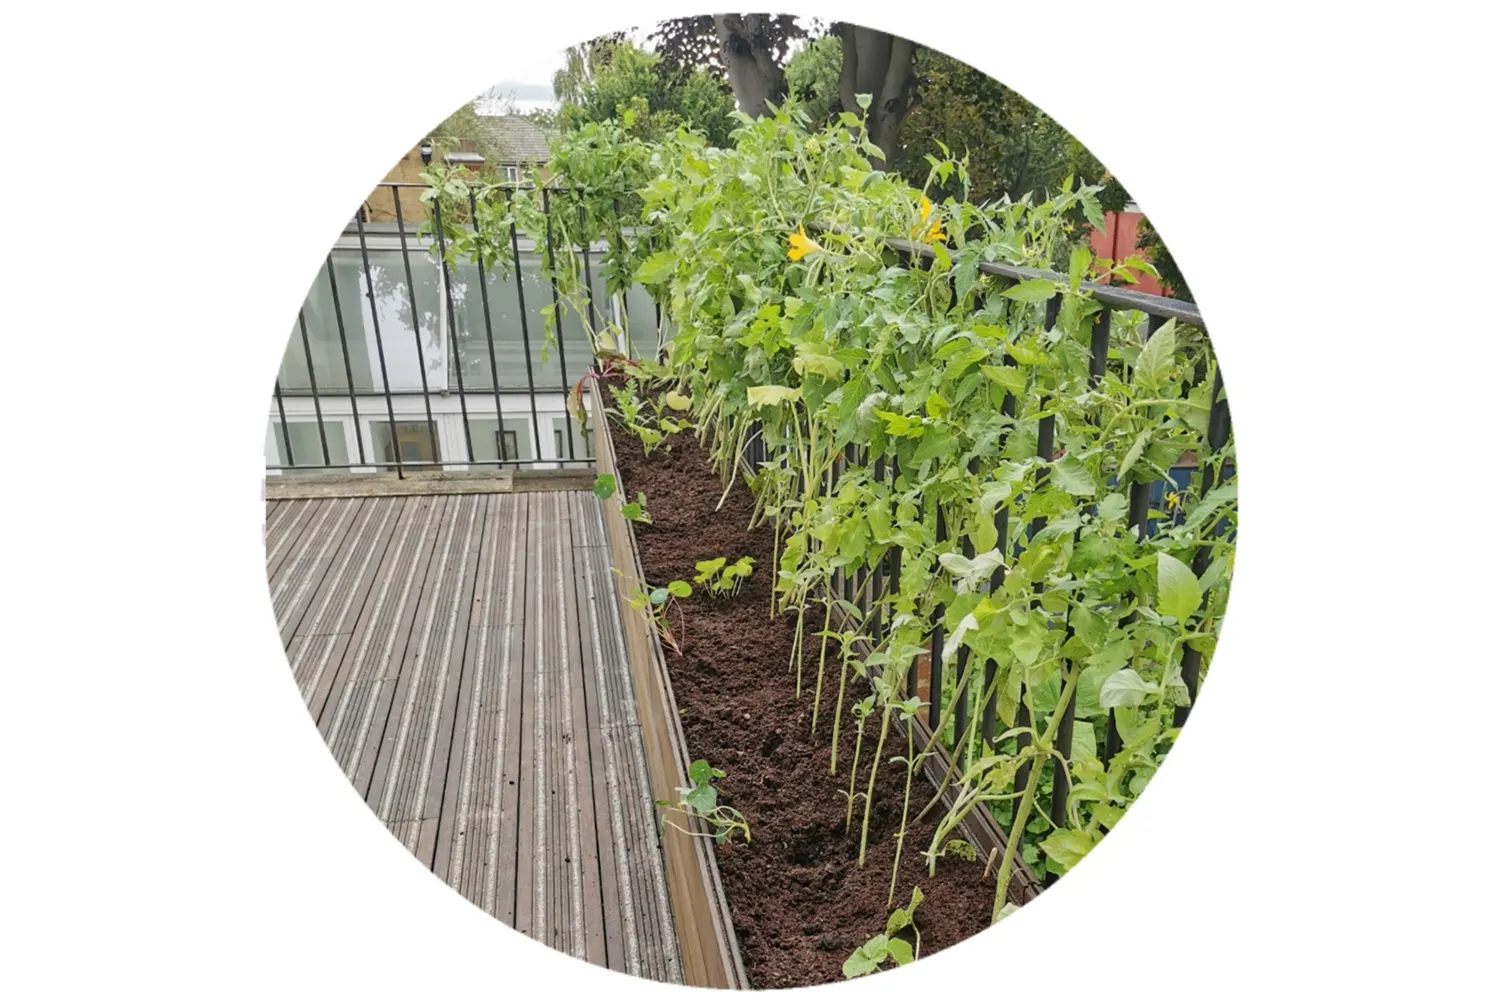 Edible rooftop garden in London with bamboo non-slip decking